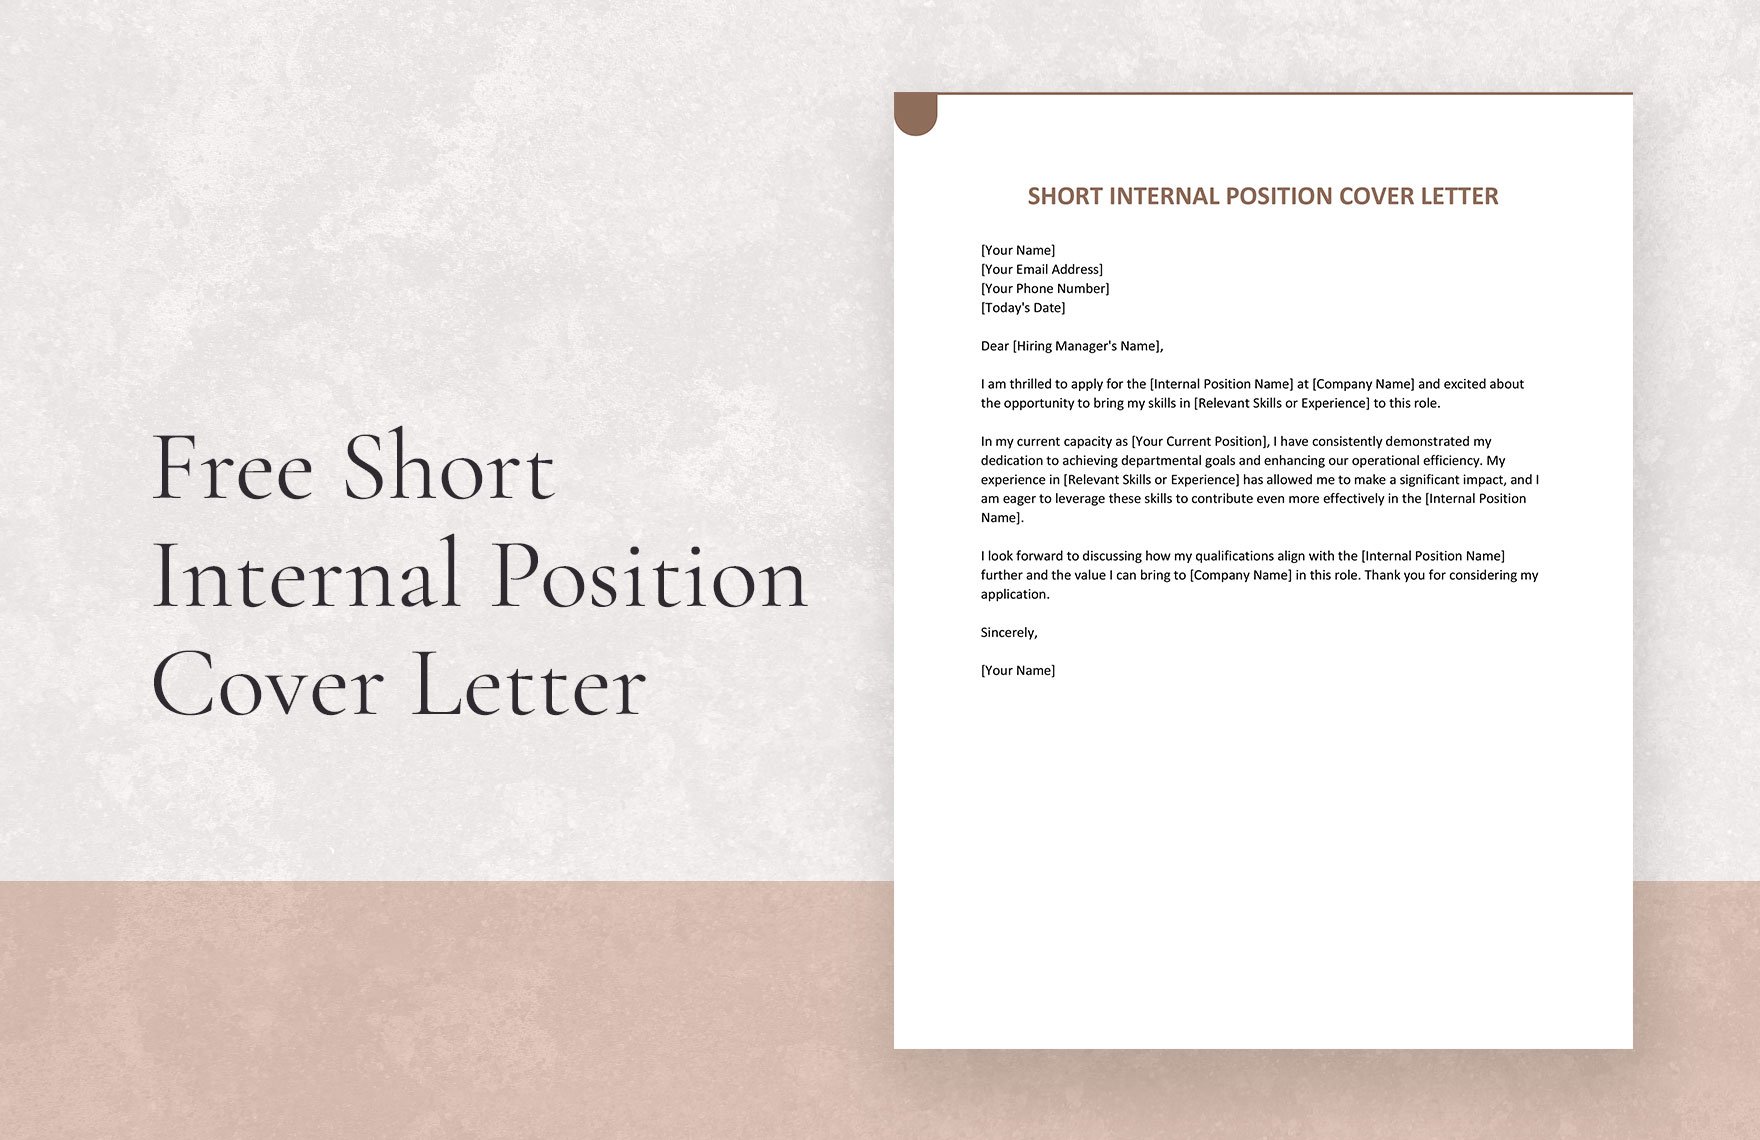 Short Internal Position Cover Letter in Word, Google Docs